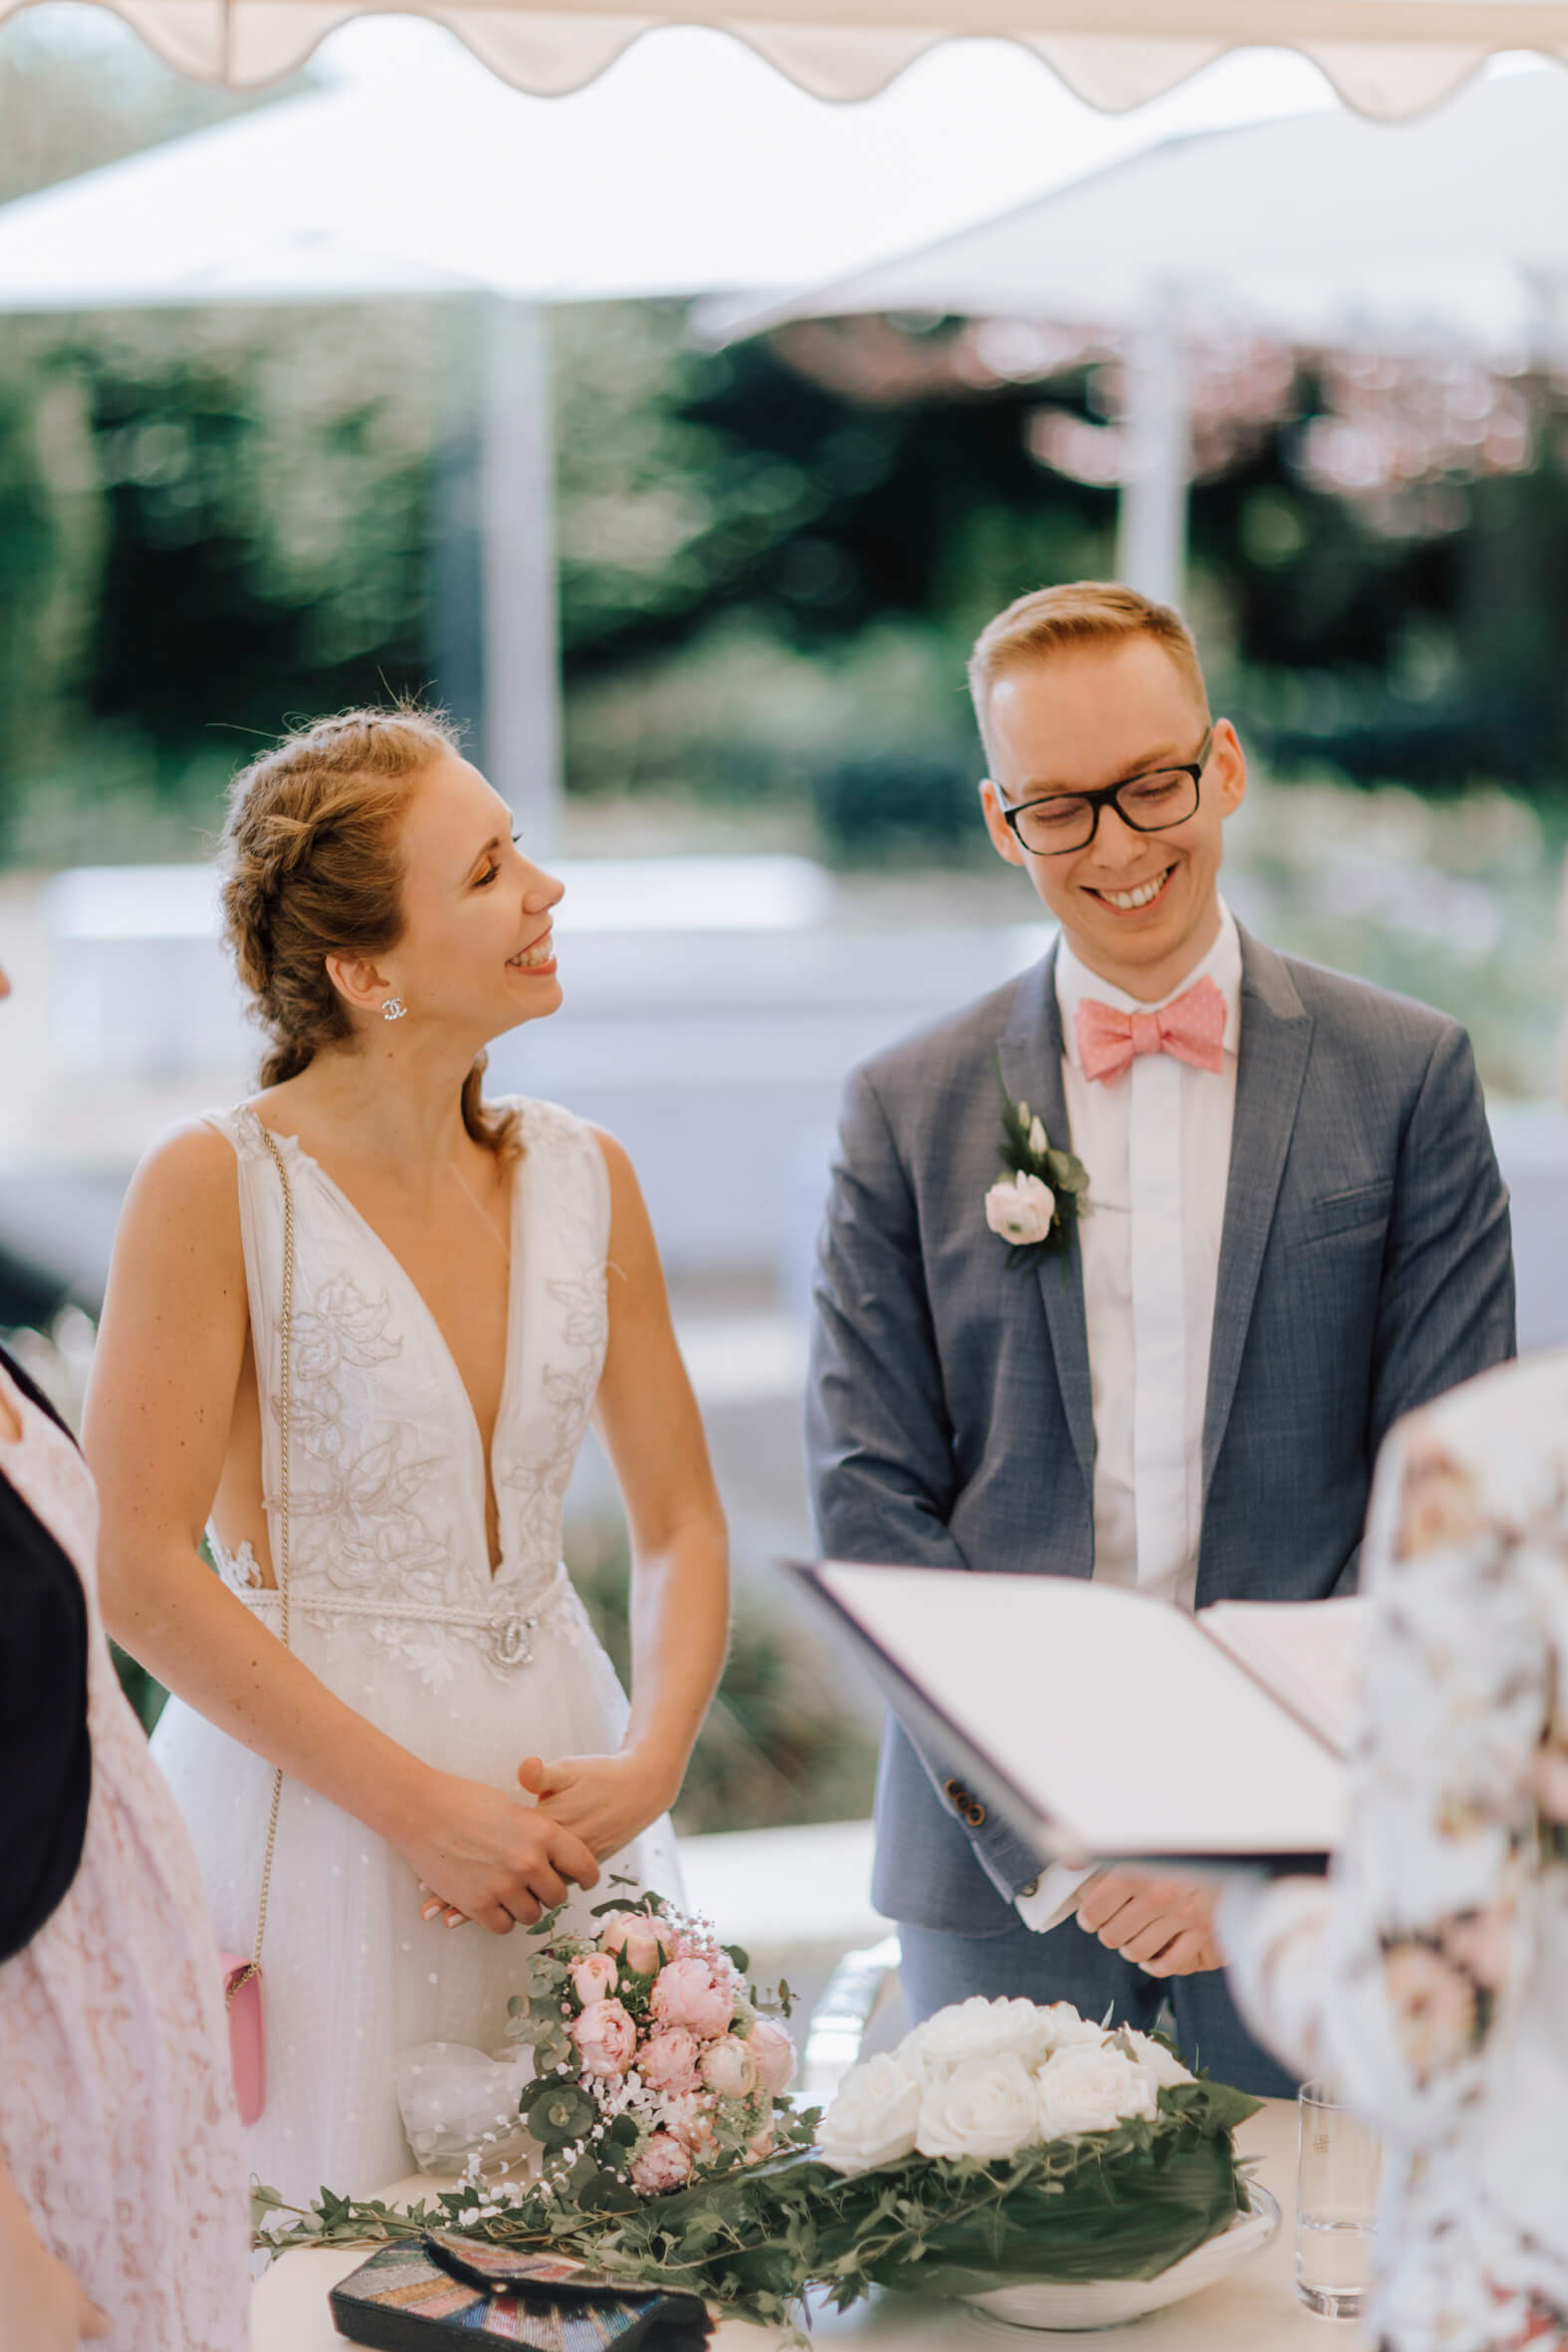 Wedding-Update-The-Wedding-Ceremony-Kationette-Fashionblogger-Lifestyleblogger-NRW-Wedding2018